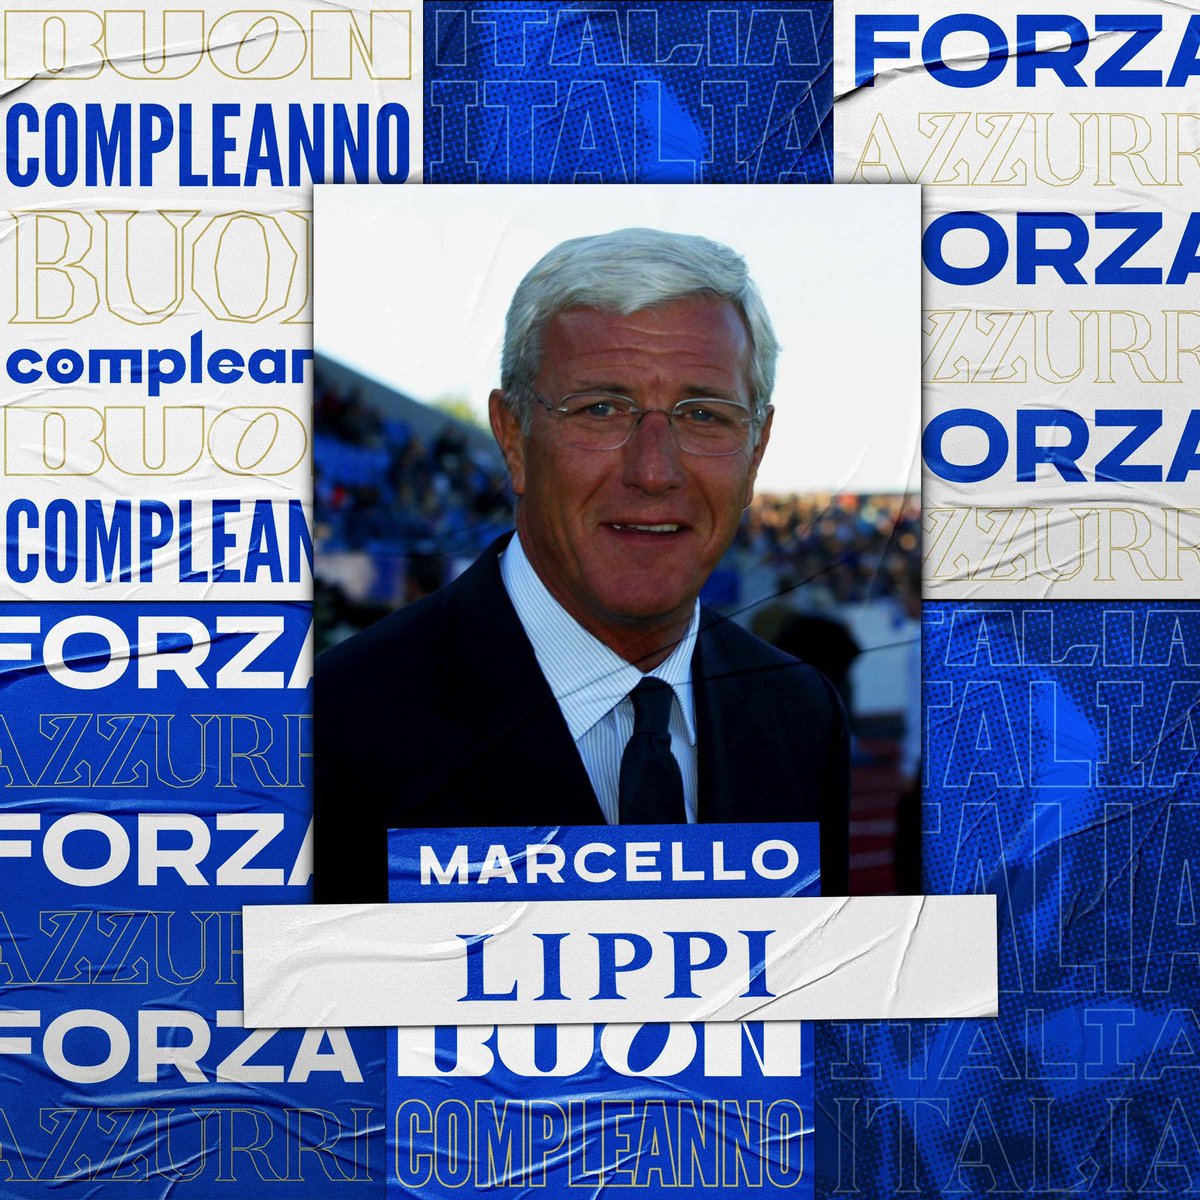 To the man who led us to the 2006 World Cup: many happy returns, Mr. Lippi 🎉 🏆 🇮🇹

#Azzurri #VivoAzzurro